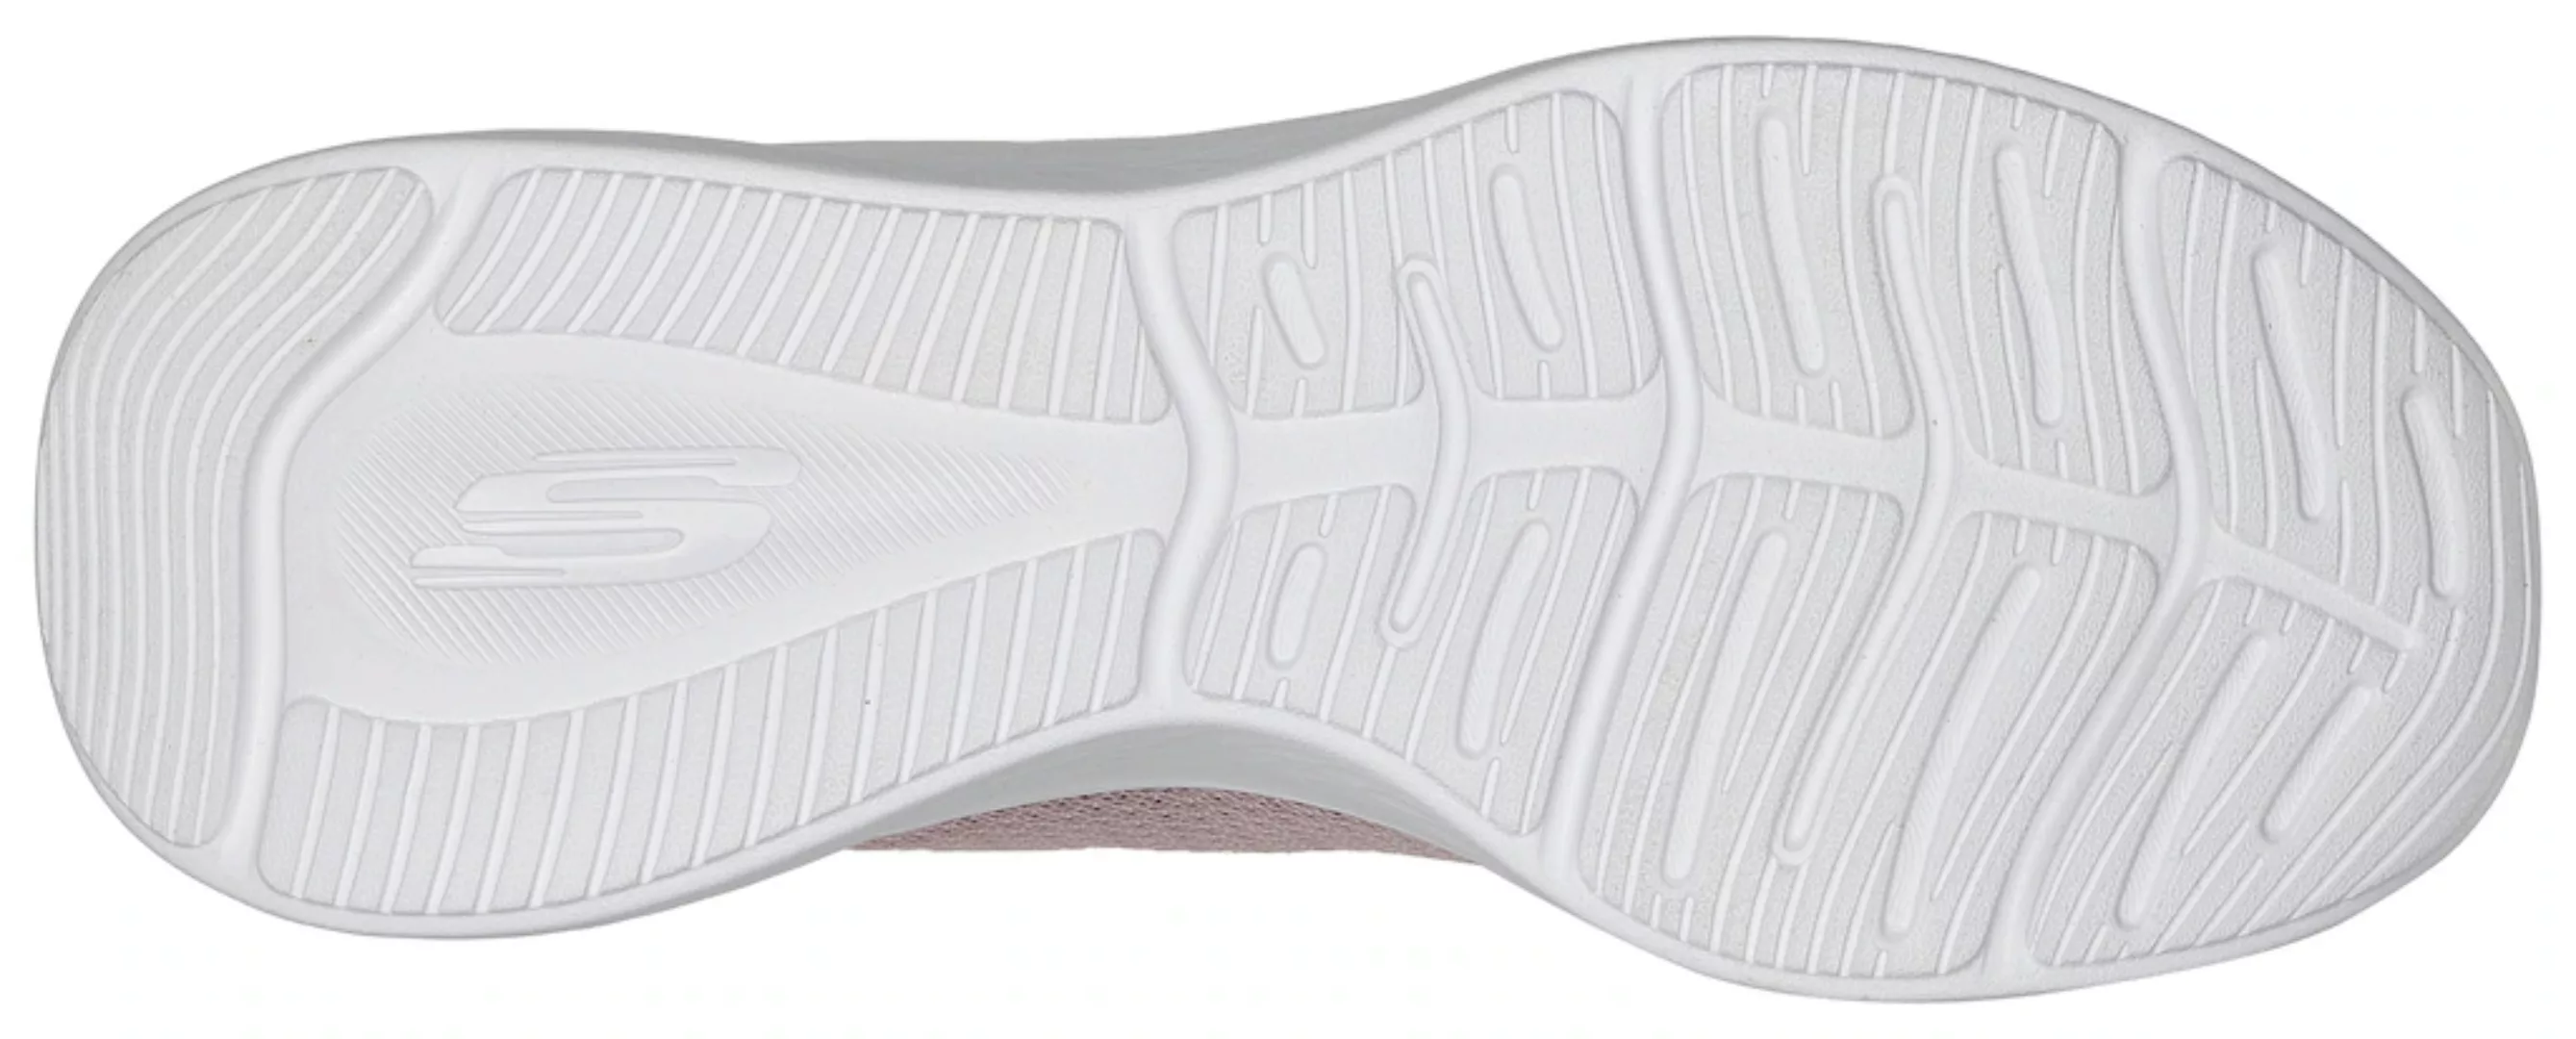 Skechers Sneaker "SKECH-LITE PRO-" günstig online kaufen